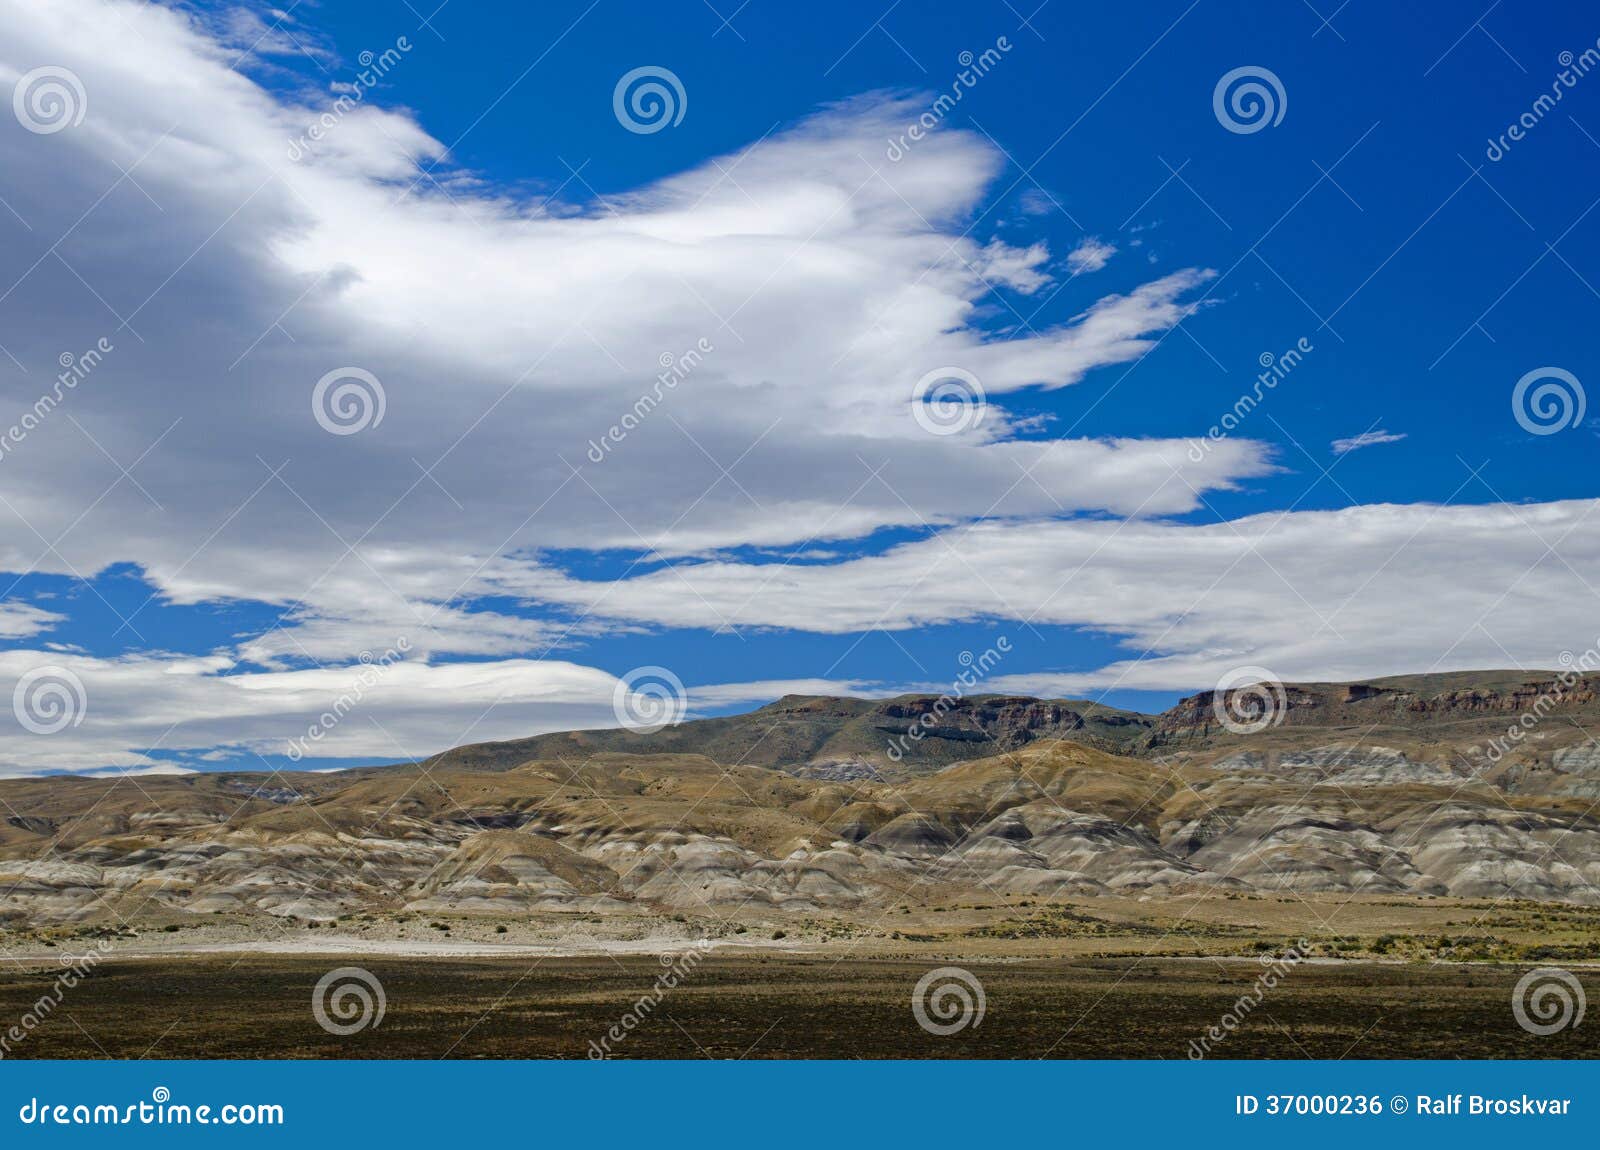 cloudscape over la leona hills, south patagonia, argentina